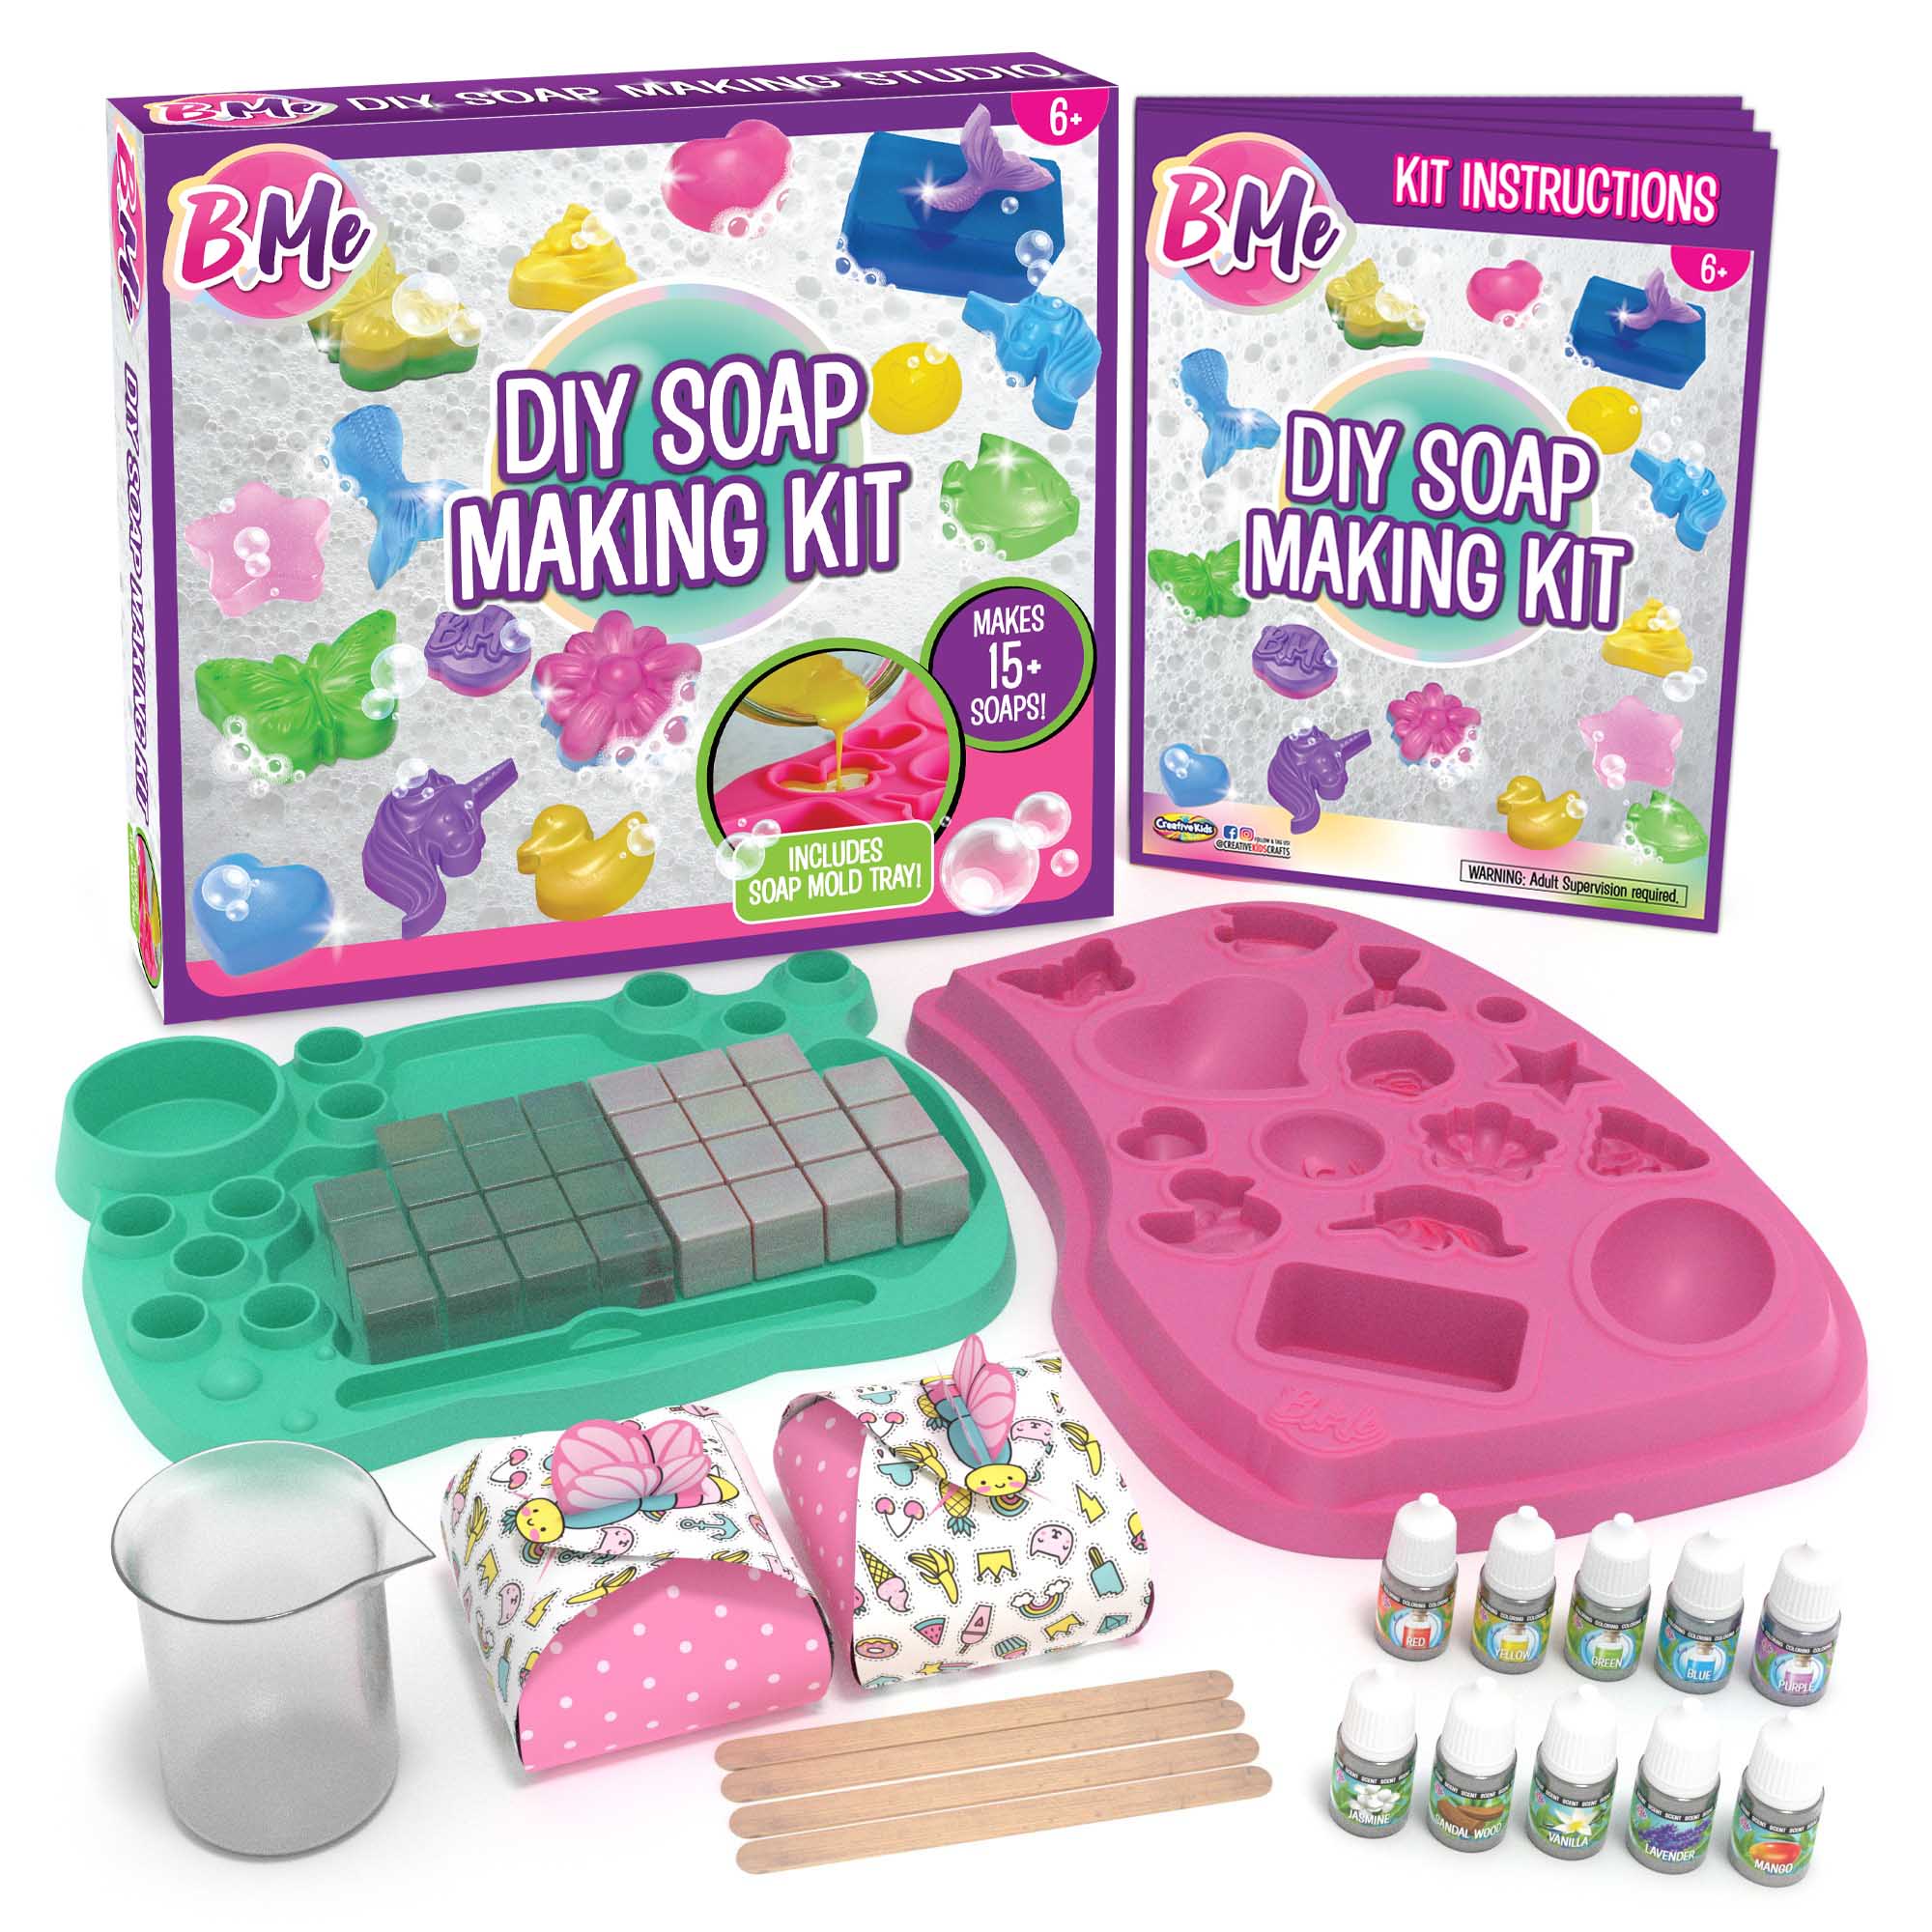 DIY Soap making kit - Other Arts & Crafts